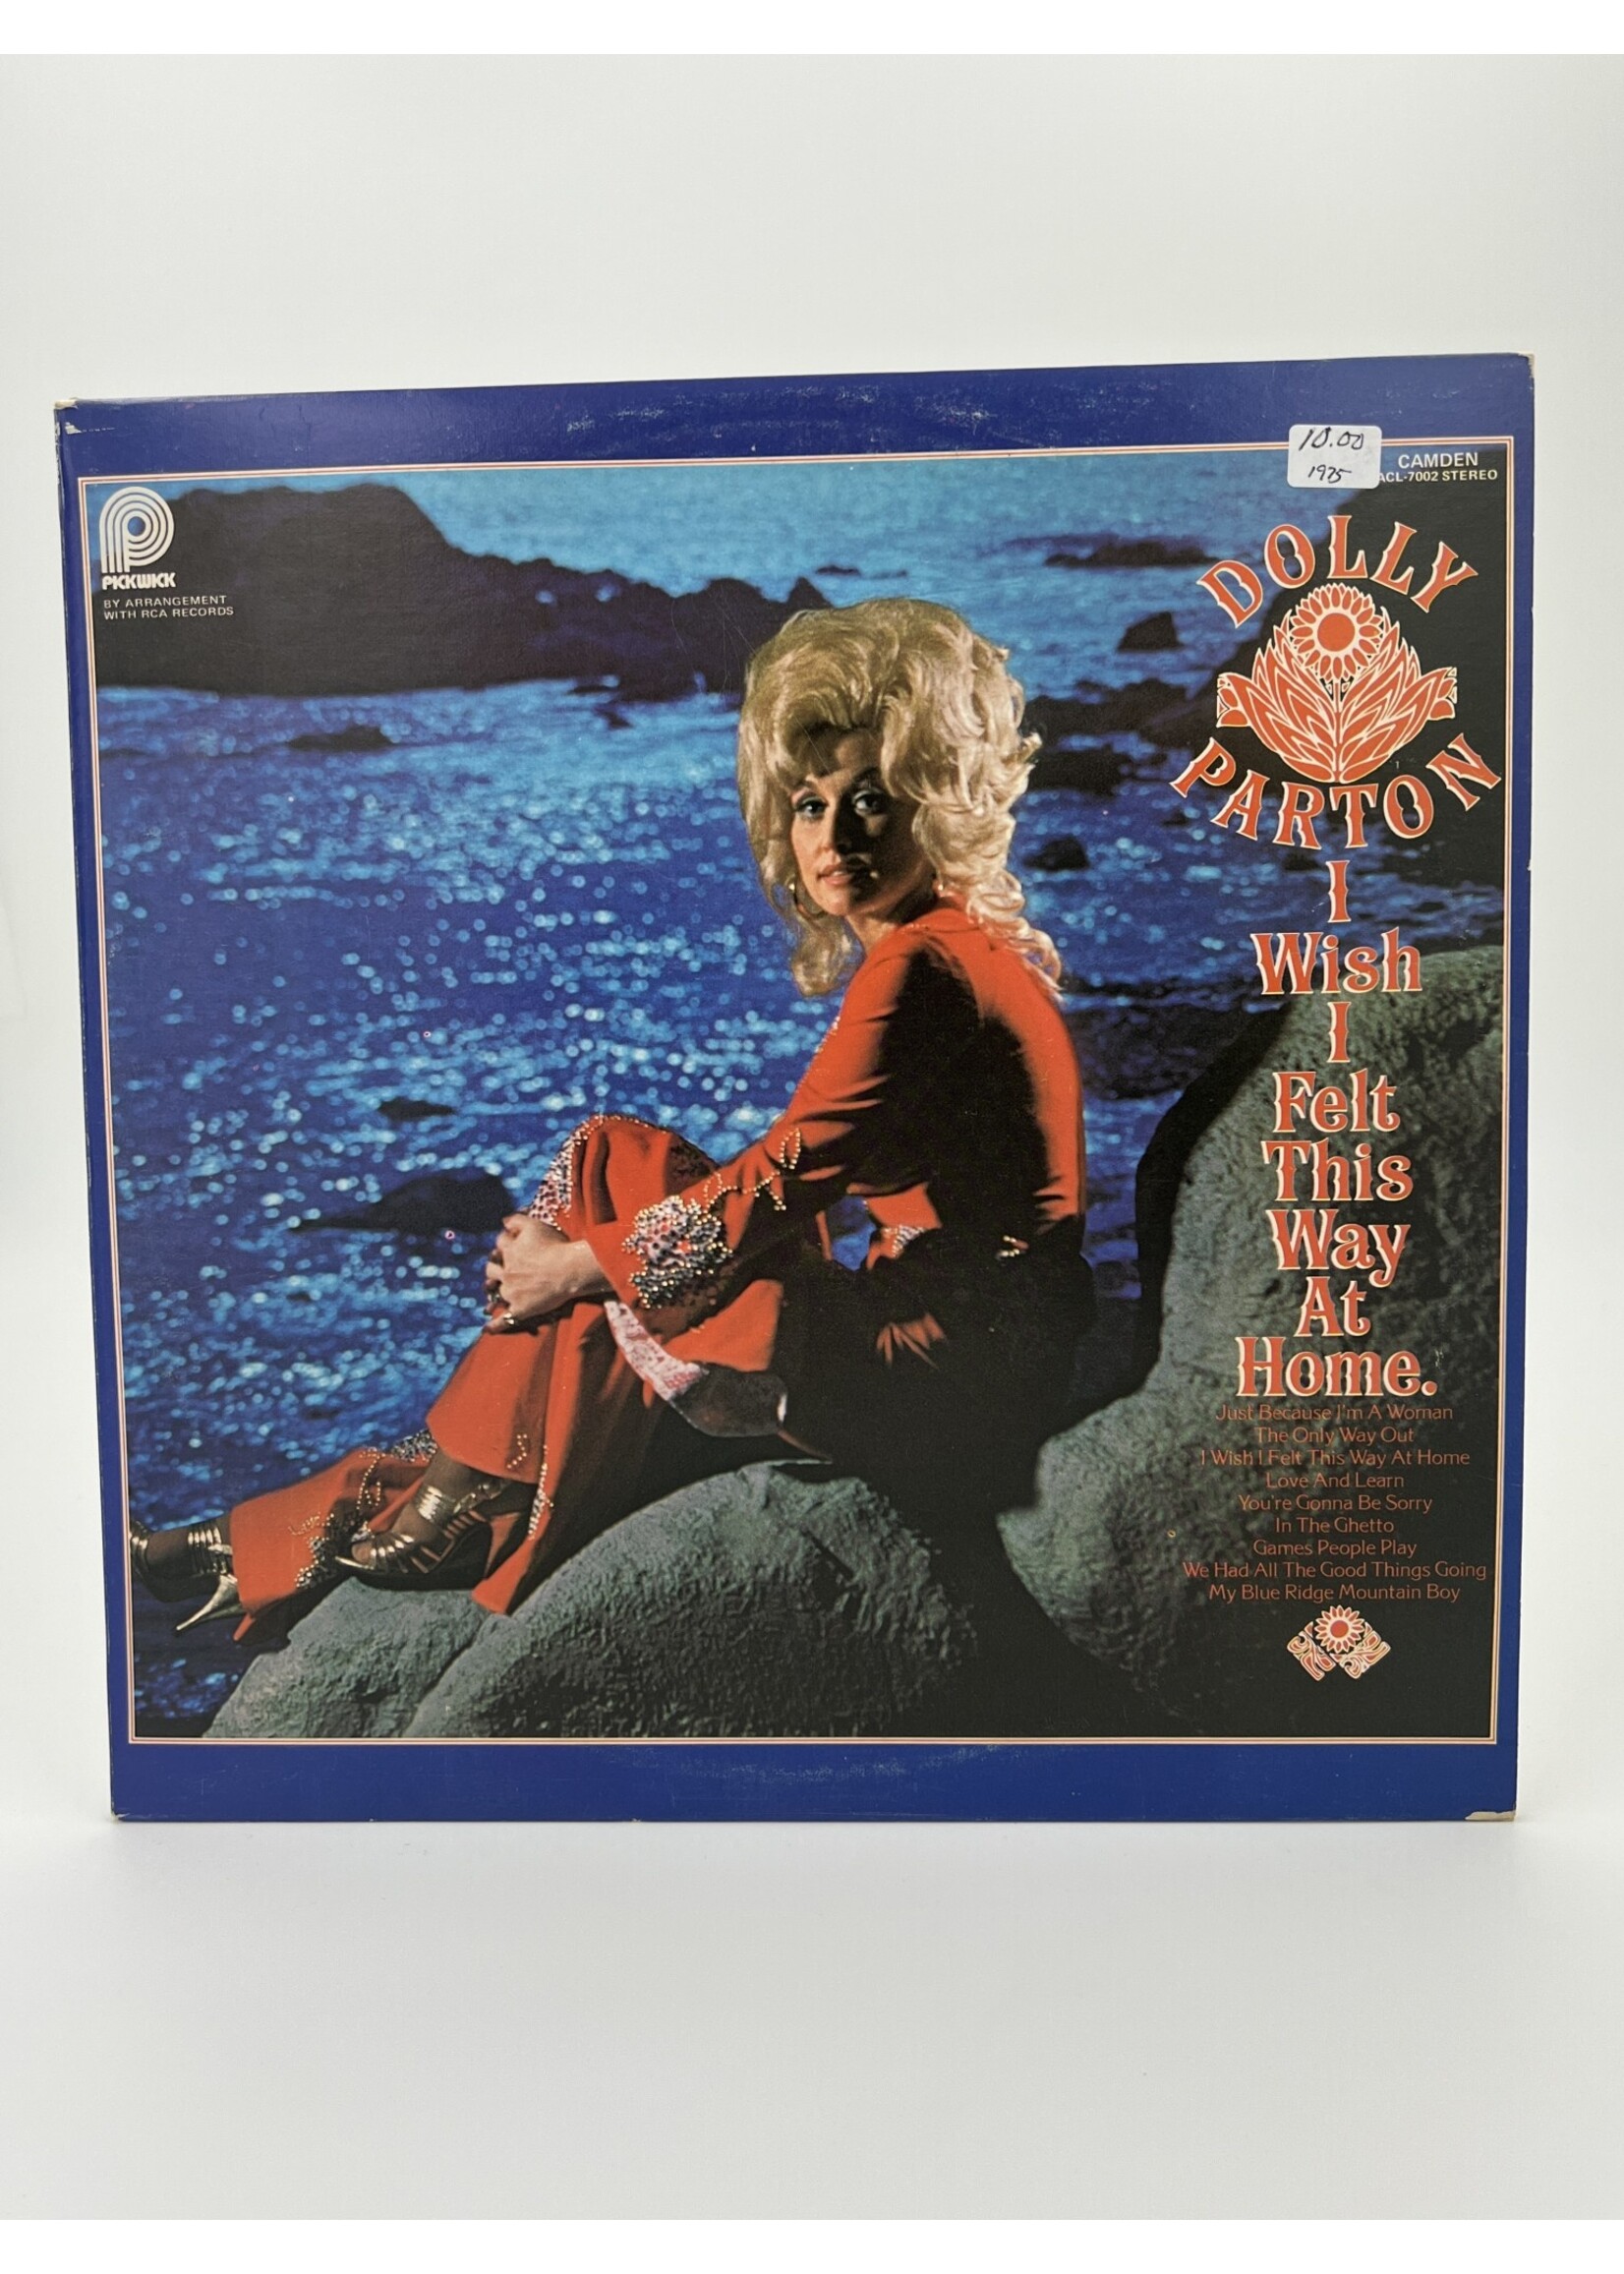 LP   Dolly Parton I Wish I Felt This Way At Home LP Record